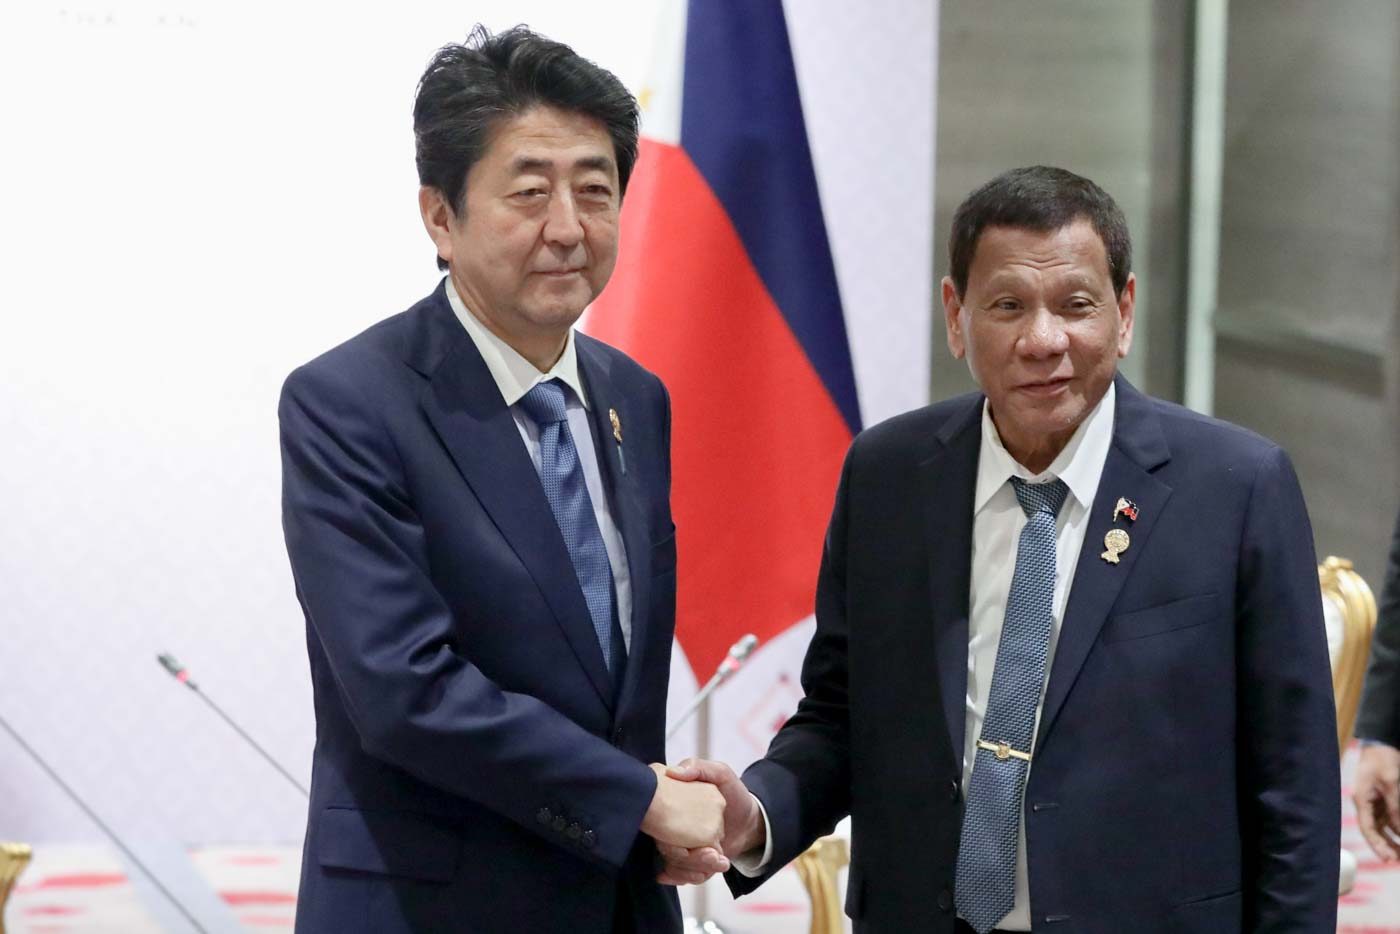 Duterte, Abe discuss comfort women, South China Sea in meeting